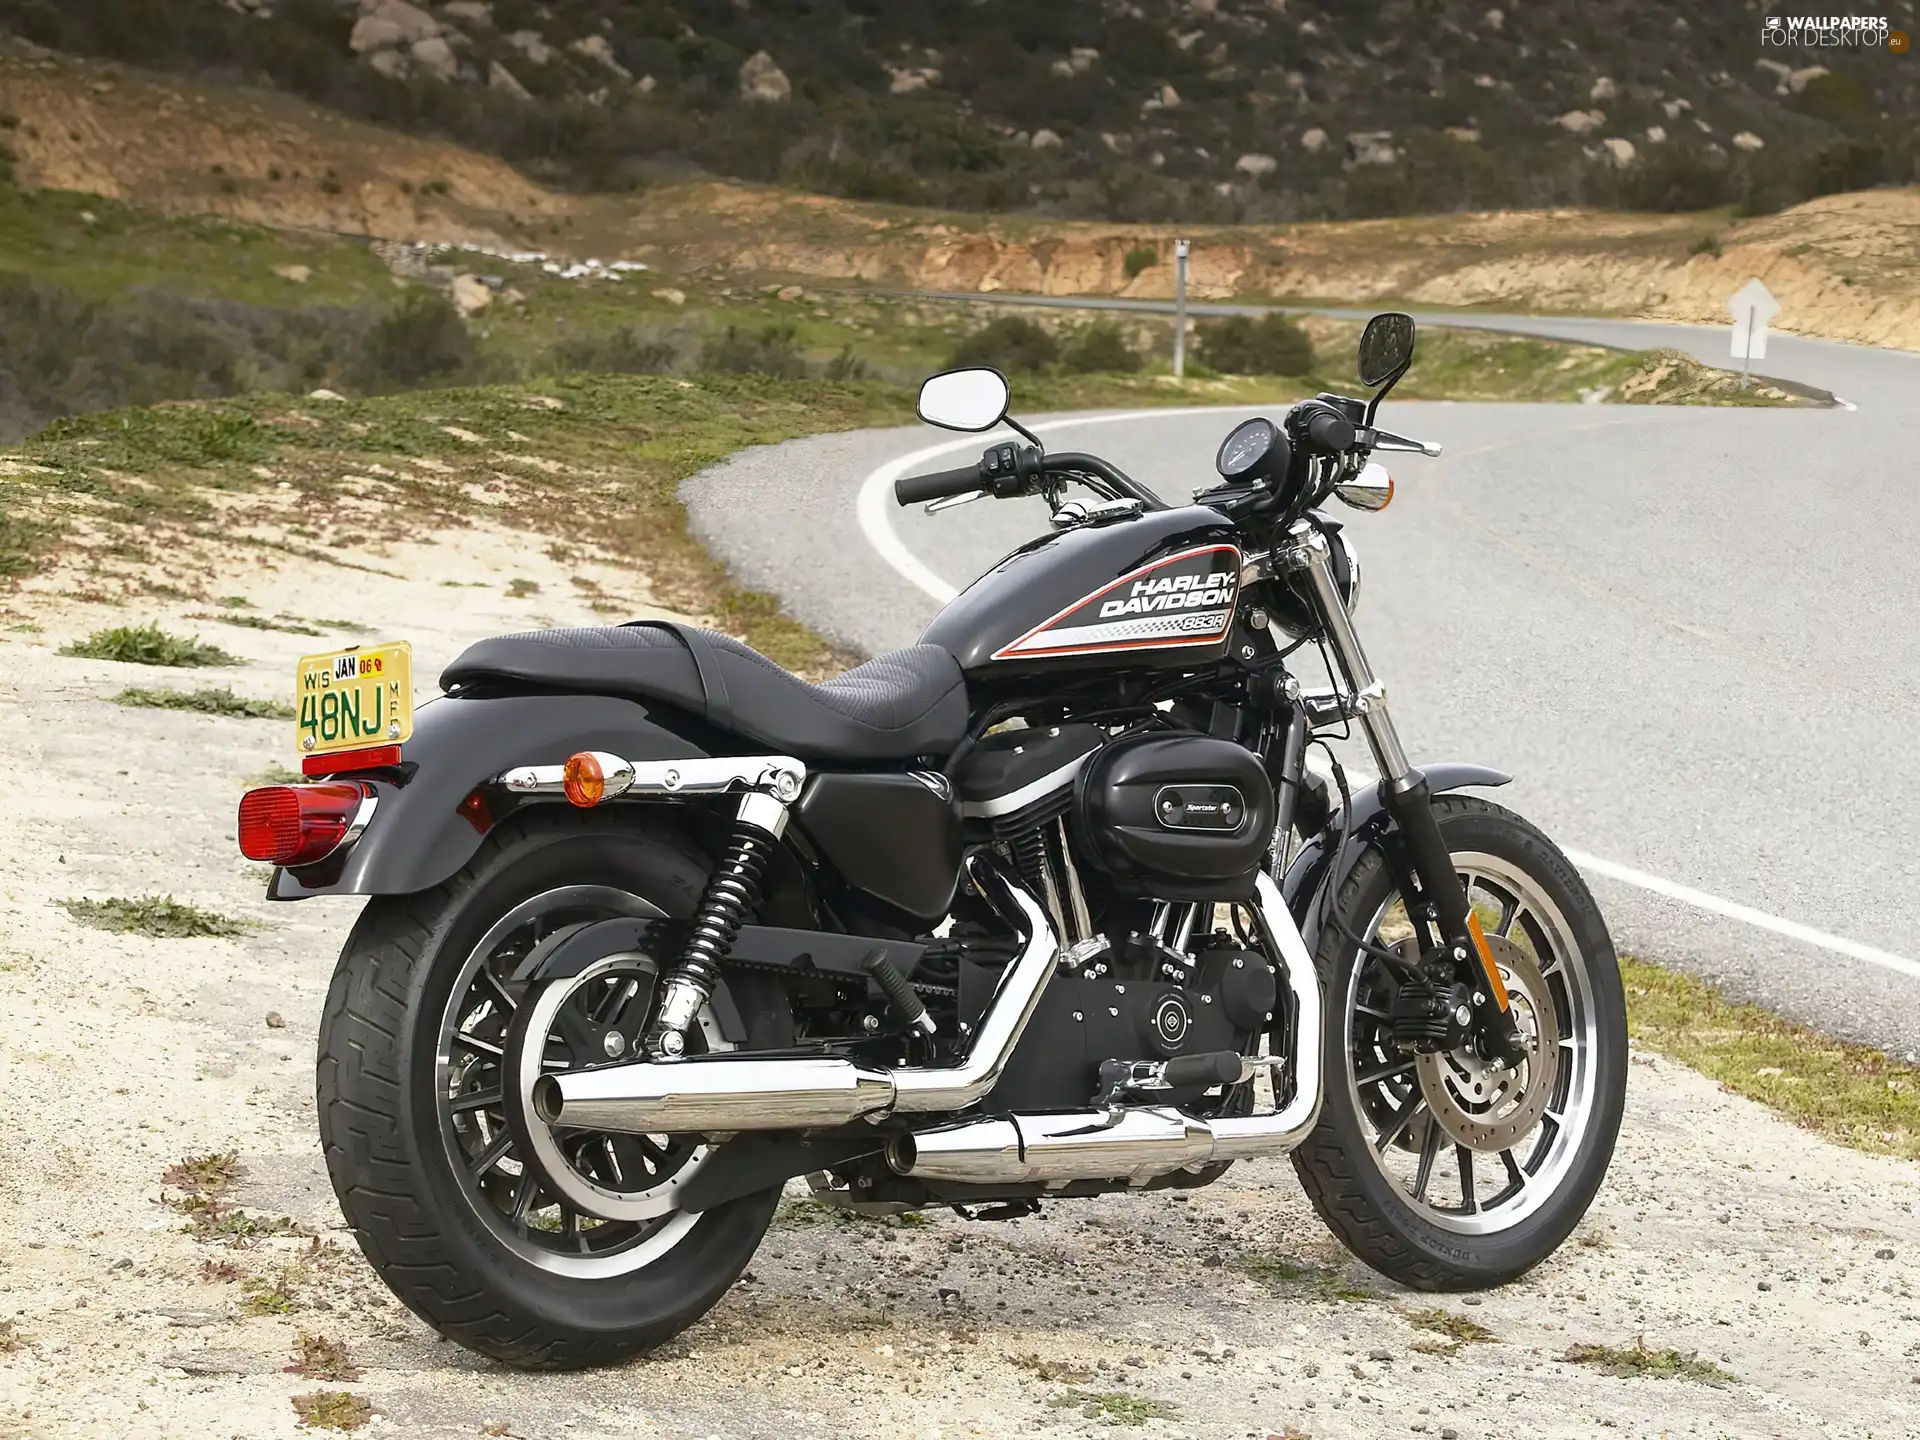 exhaust, Harley Davidson Sportster XL883, tubing